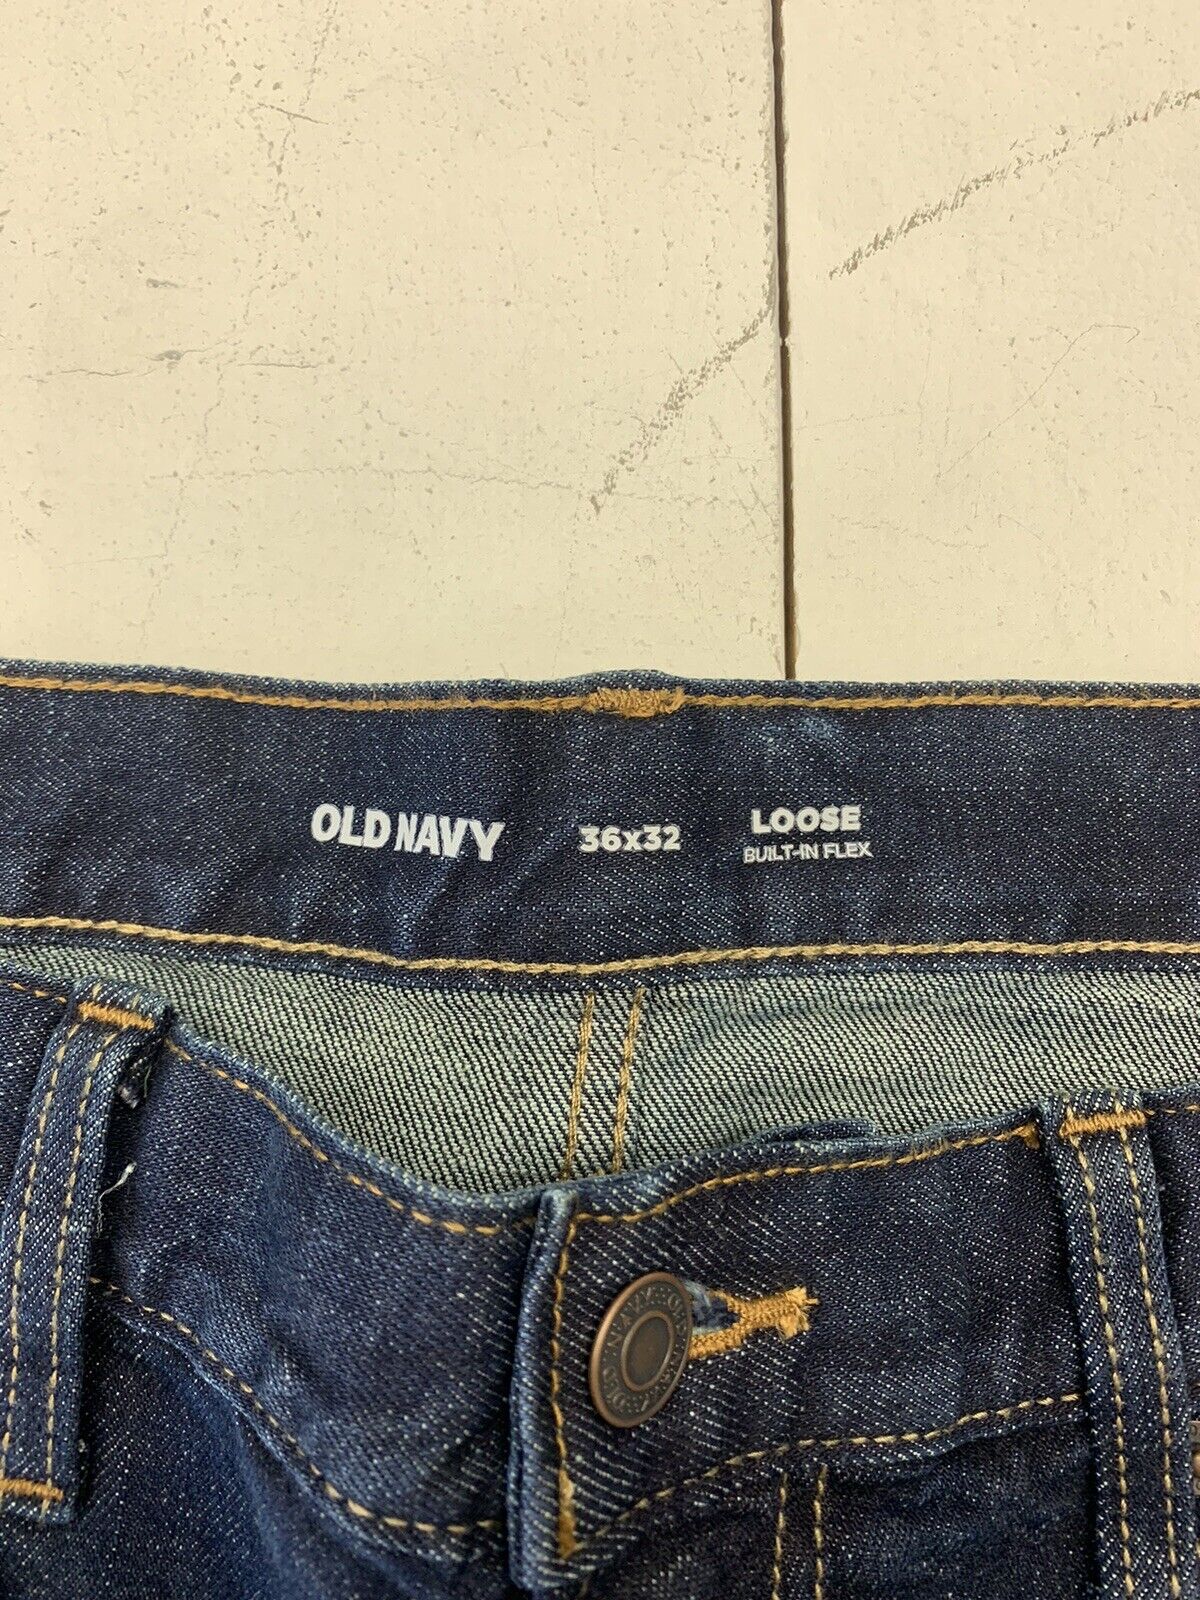 Navy Mens Blue Denim Jeans Size 36/32 beyond exchange